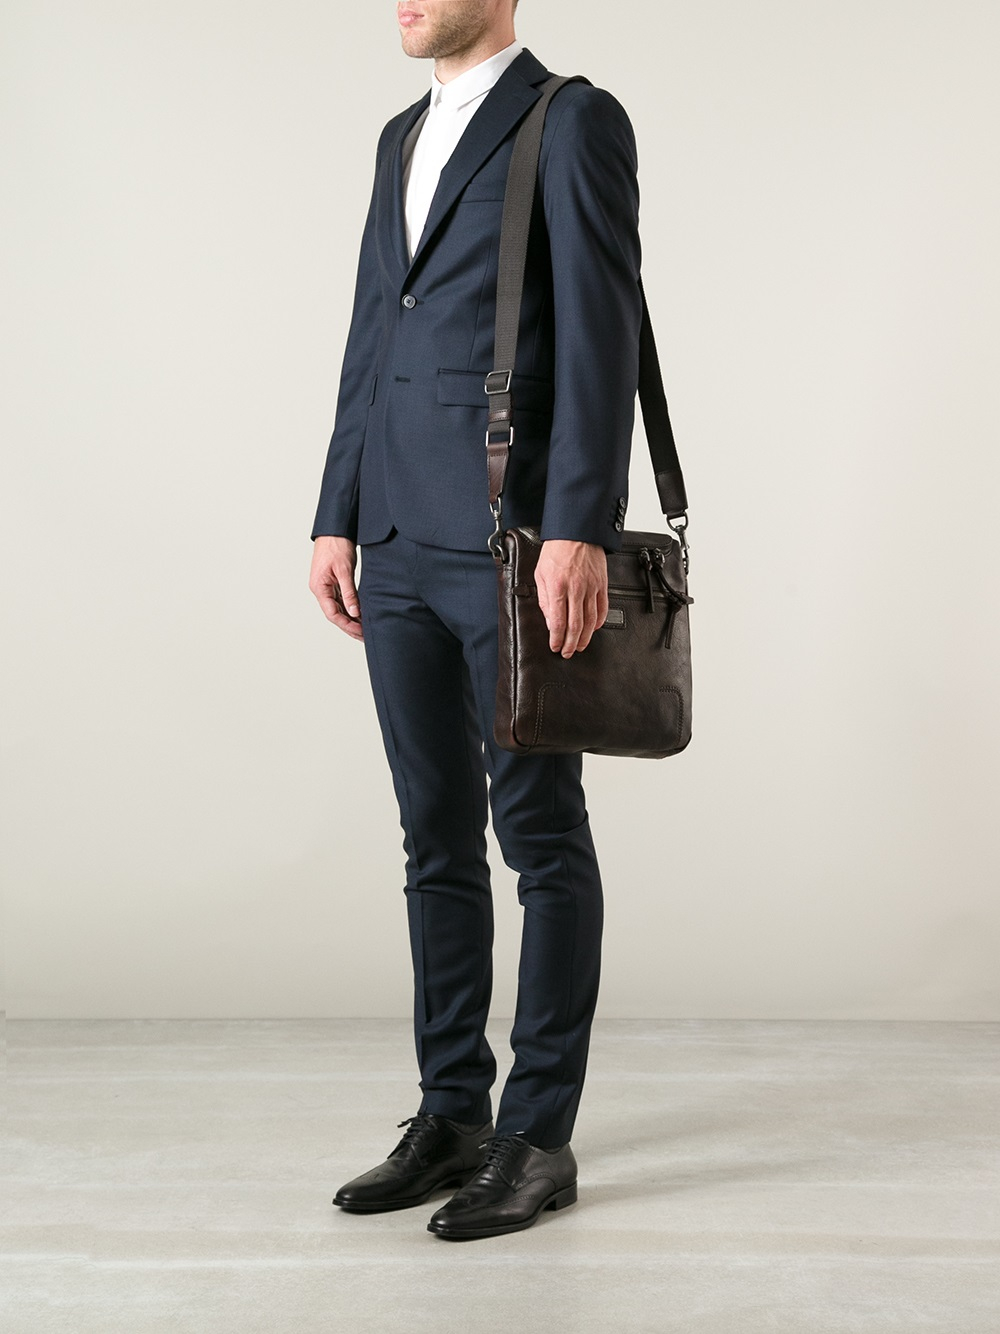 Lyst - Dolce & Gabbana Satchel Bag in Brown for Men